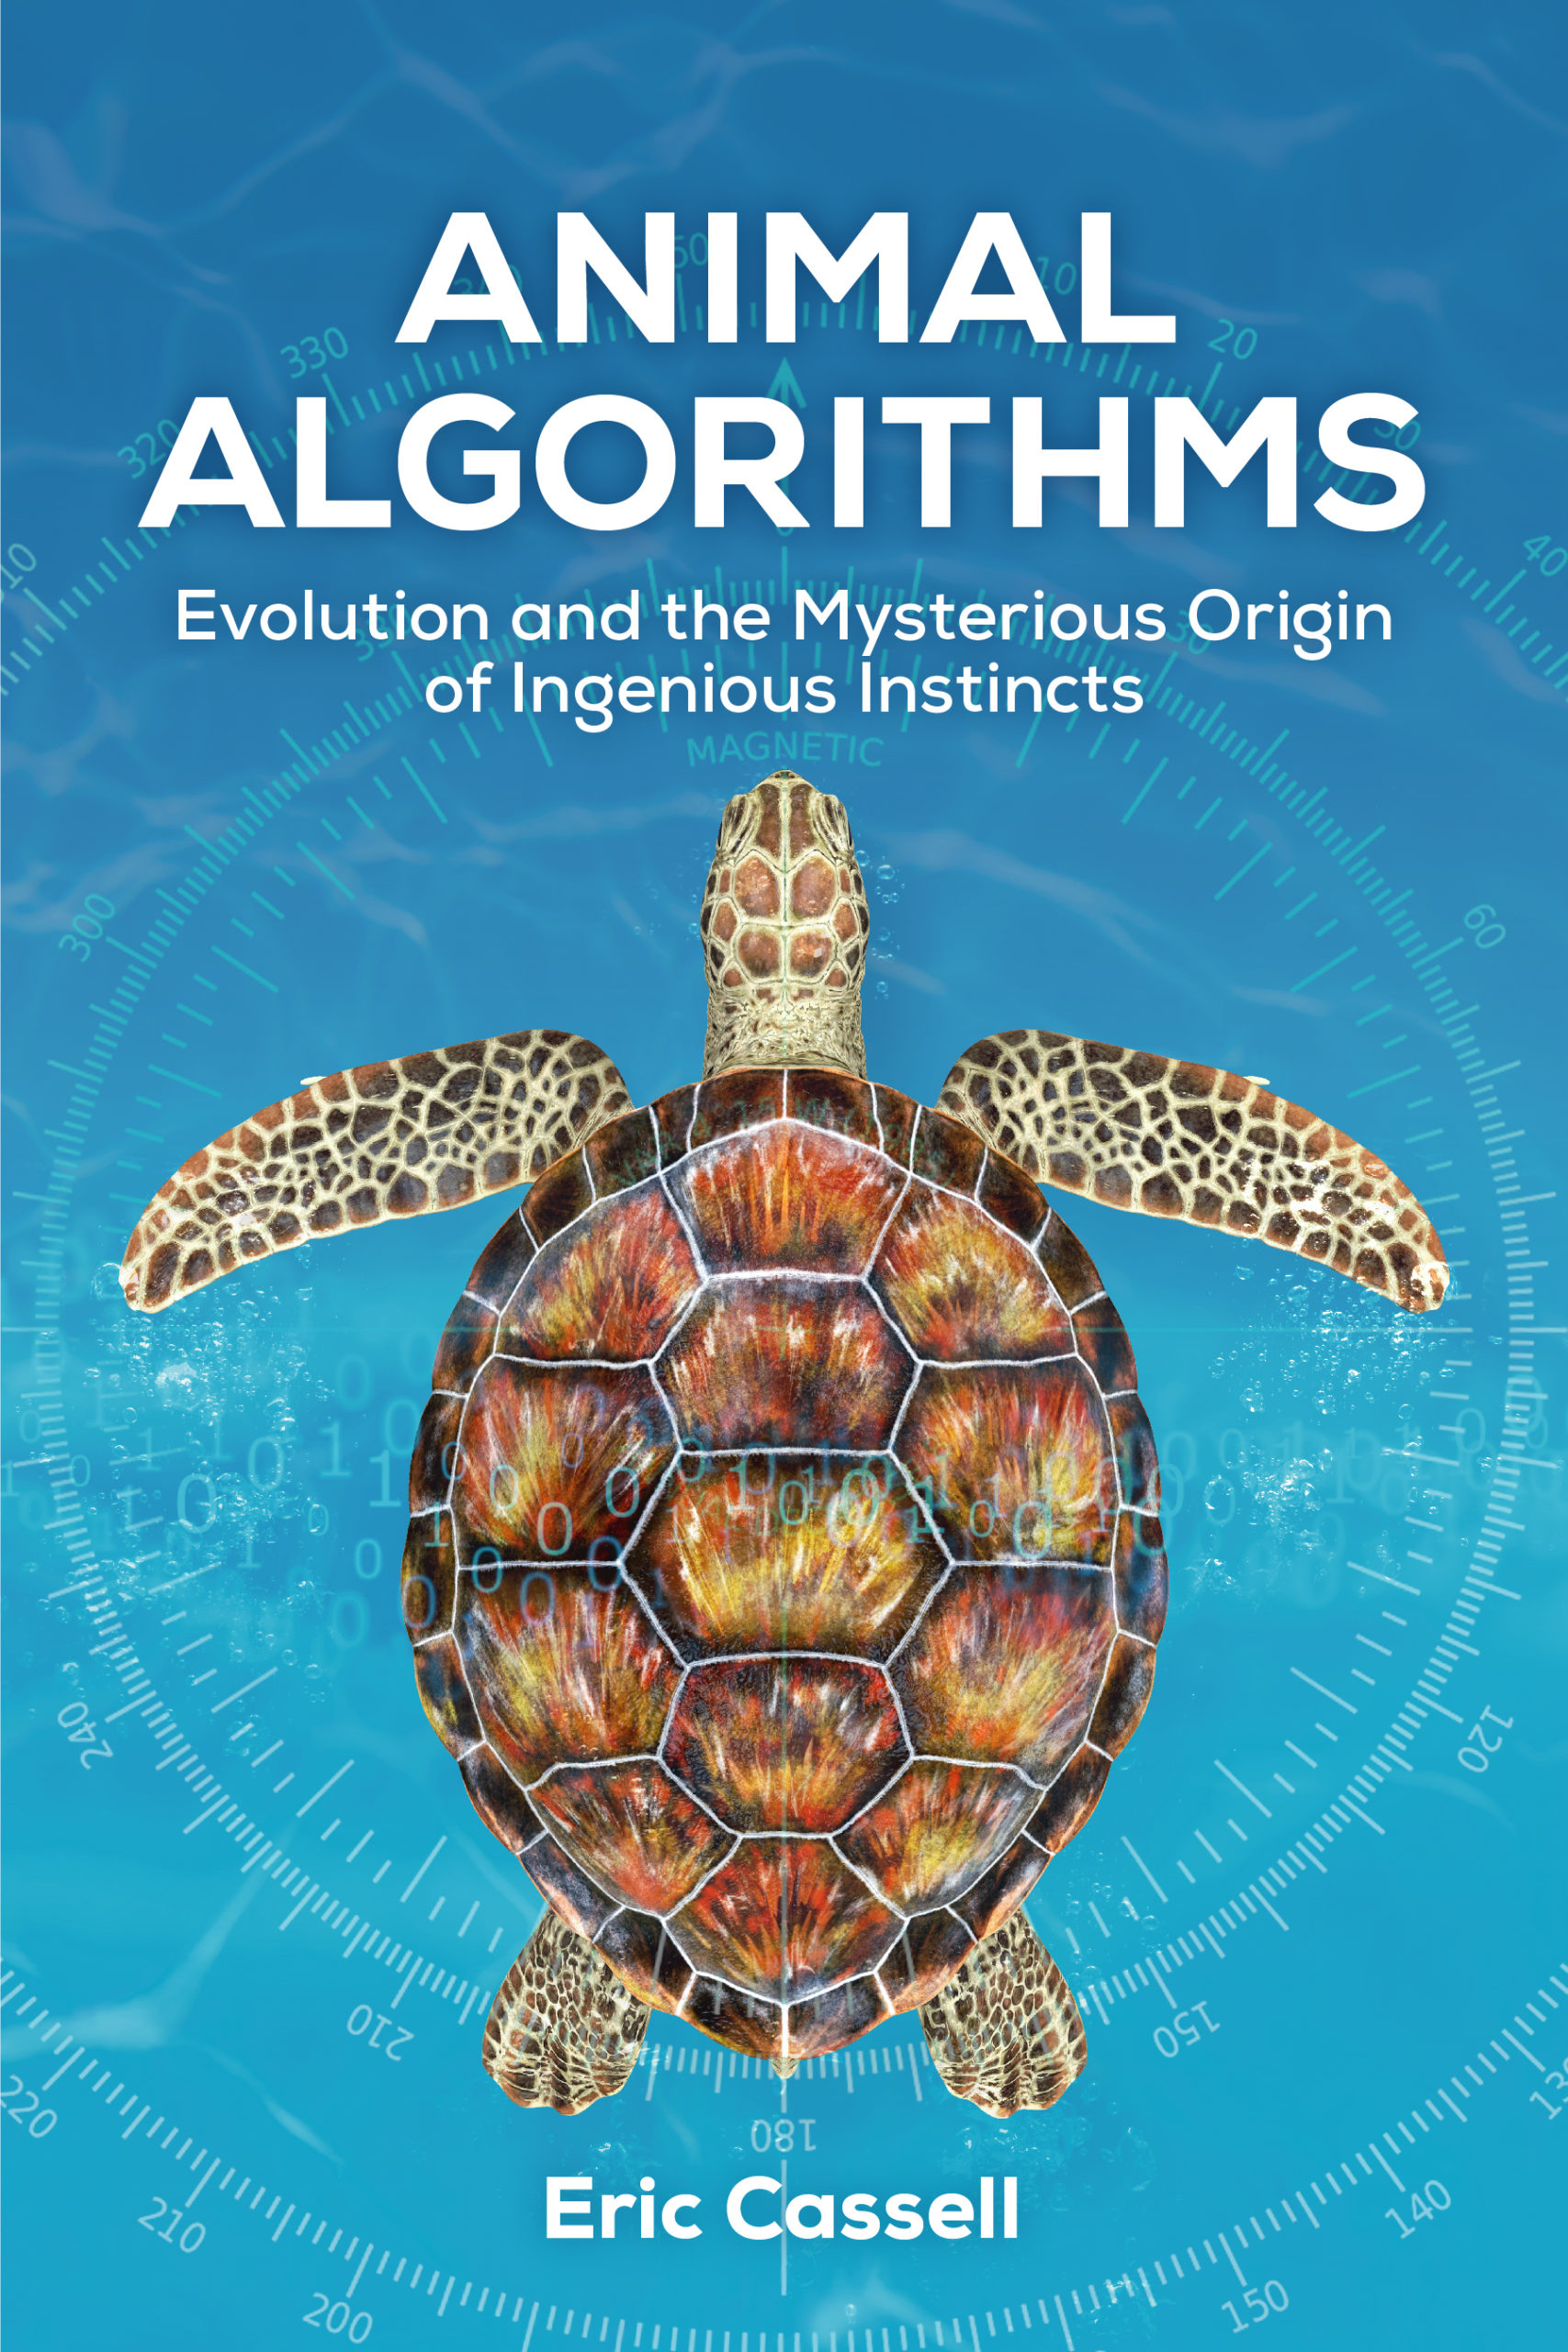 Animal Algorithms | Discovery Institute